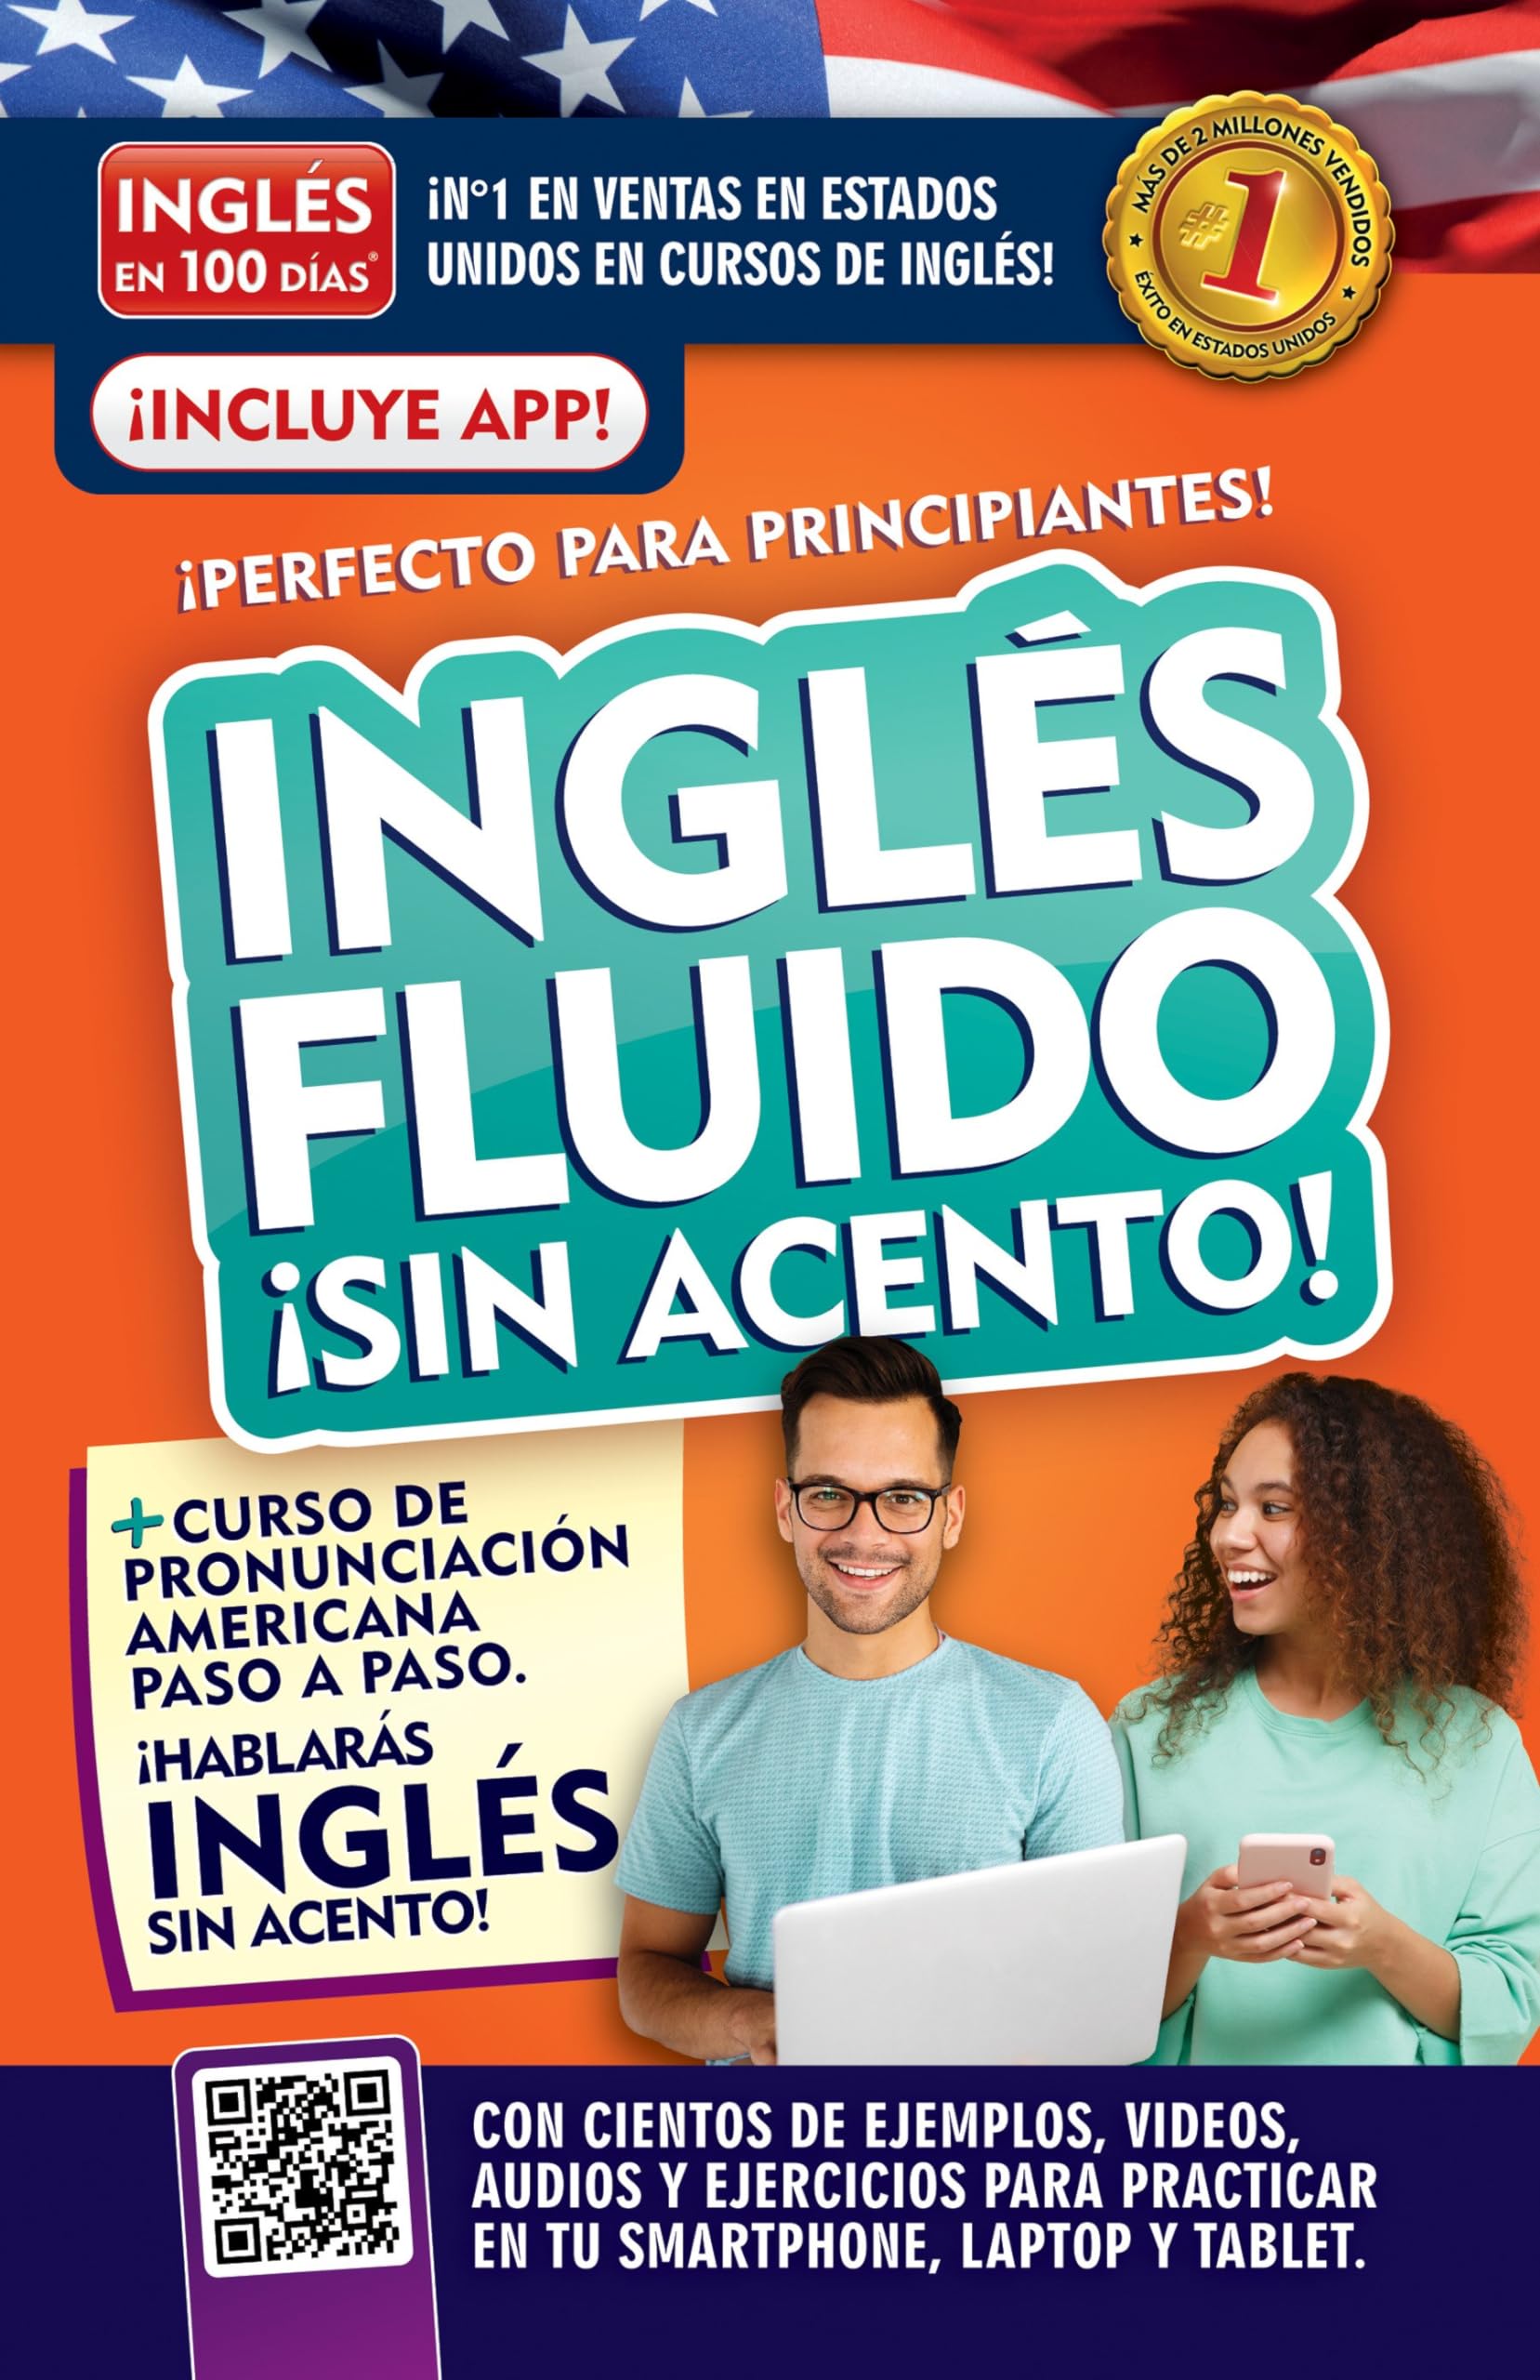 Inglés fluido ¡Sin acento! / Fluent and Accent-Free English (Inglés en 100 días) (Spanish Edition)